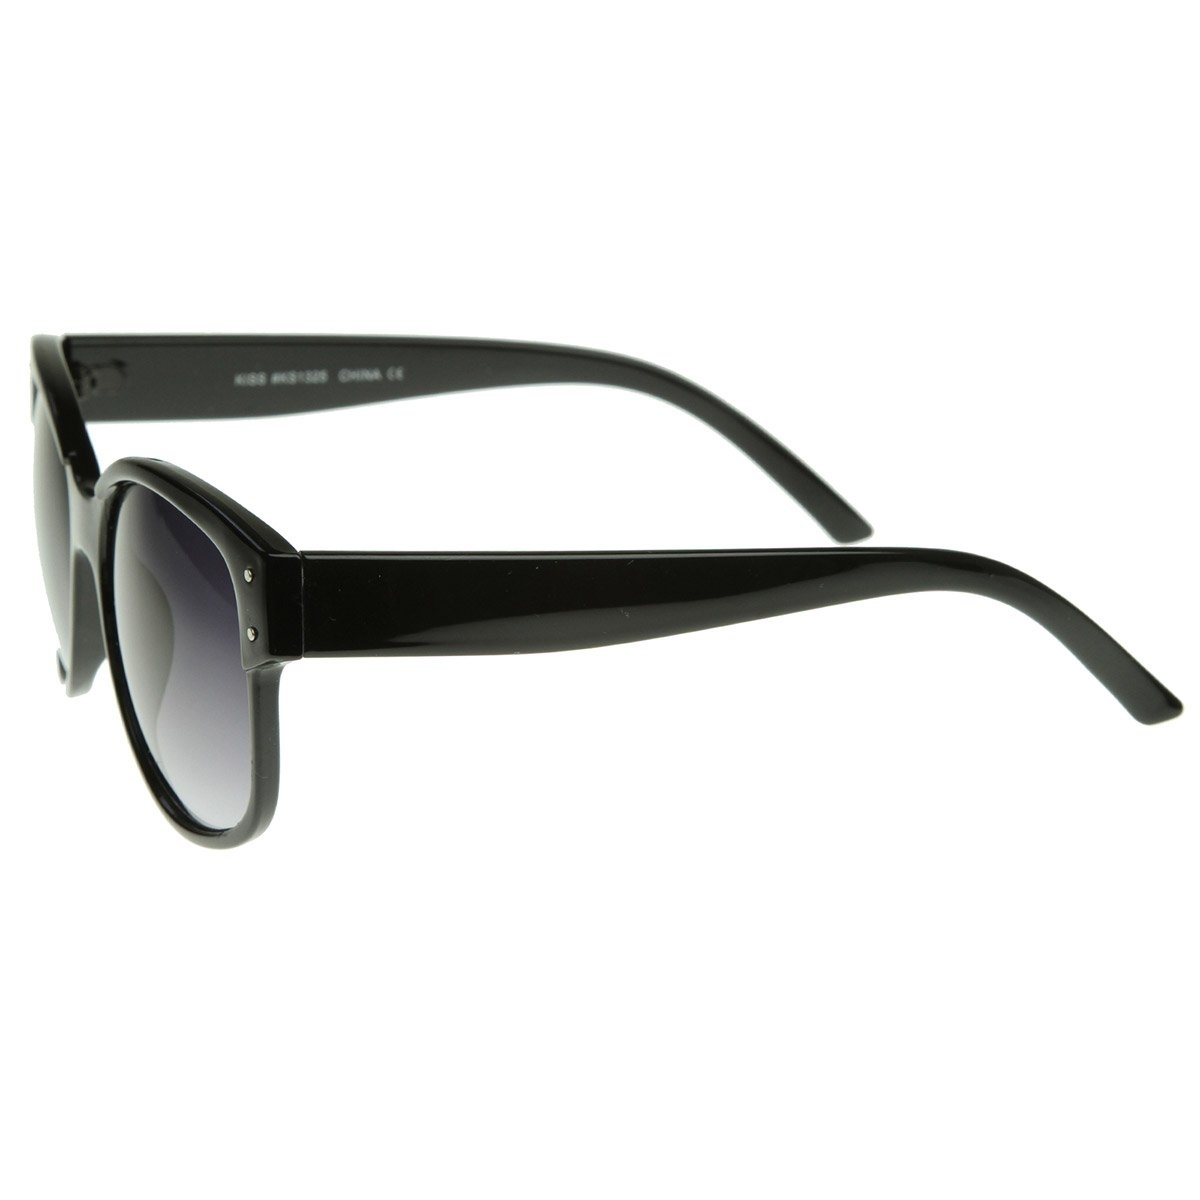 Designer Inspired Large Oversized Retro Style Sunglasses With Metal Rivets - Tortoise